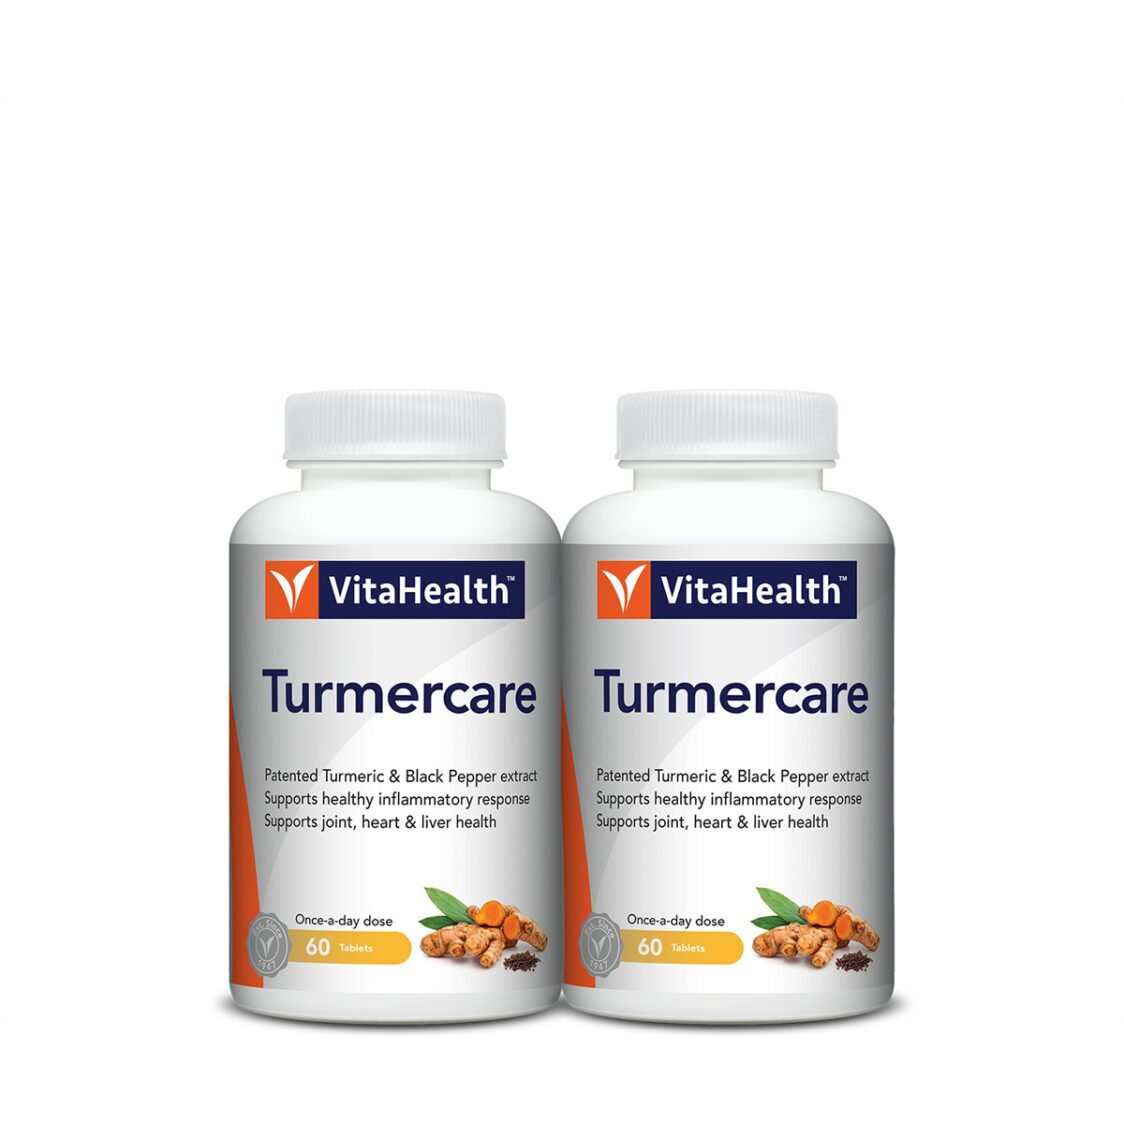 VitaHealth Turmercare 2x60 Tablets